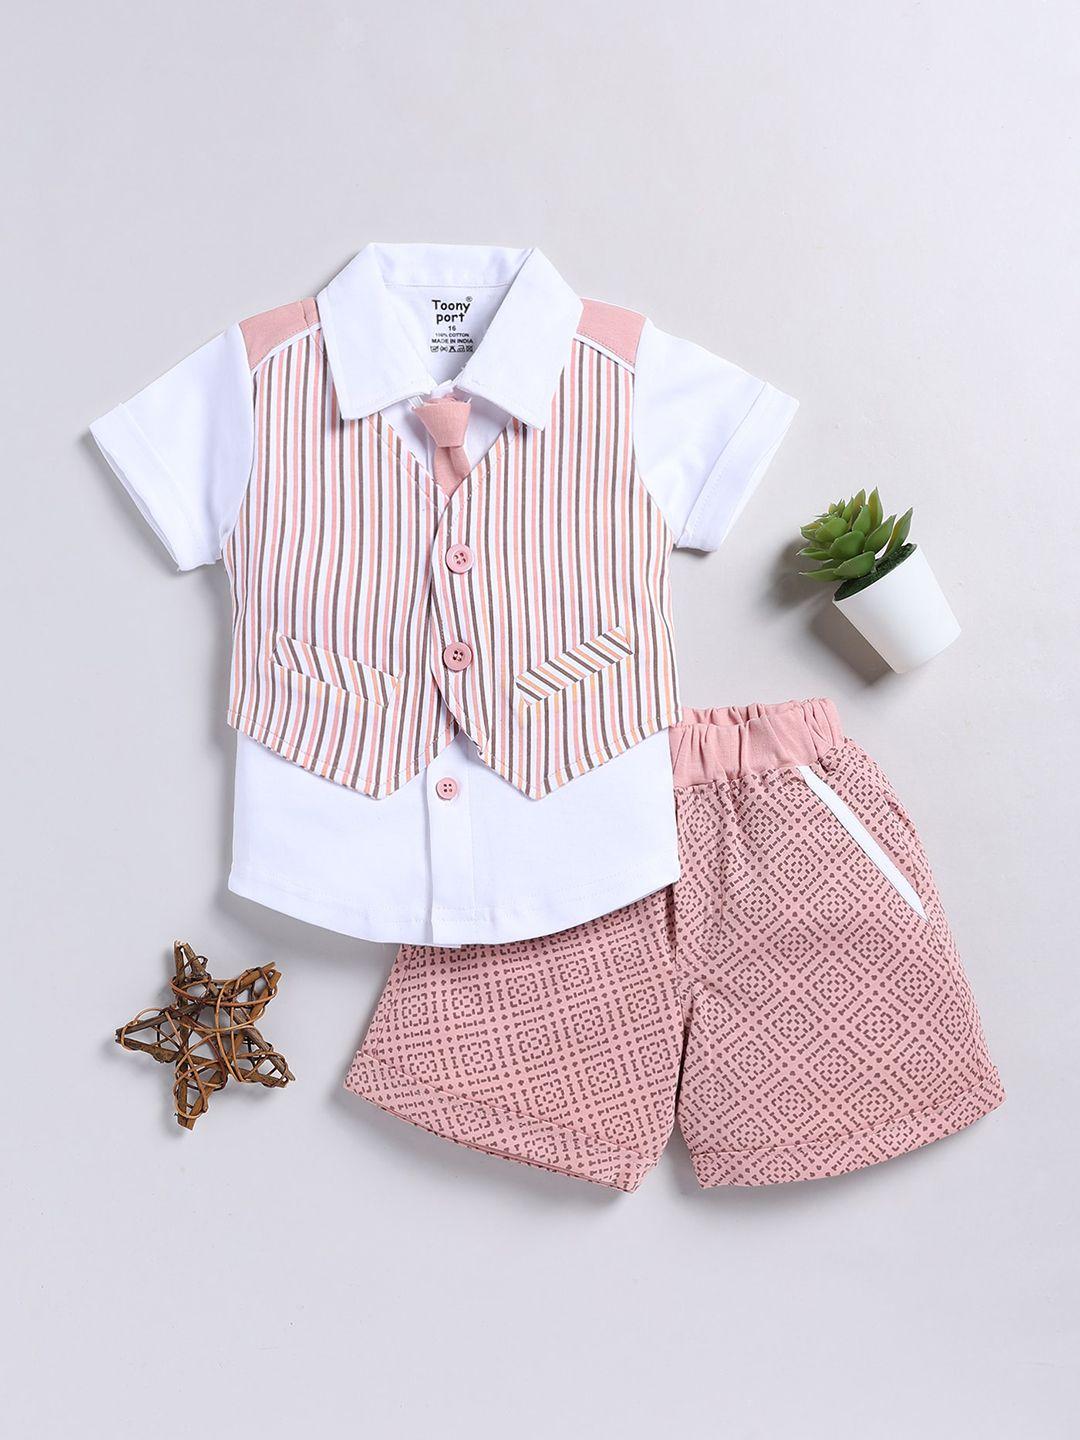 toonyport-kids-striped-shirt-collar-pure-cotton-clothing-set